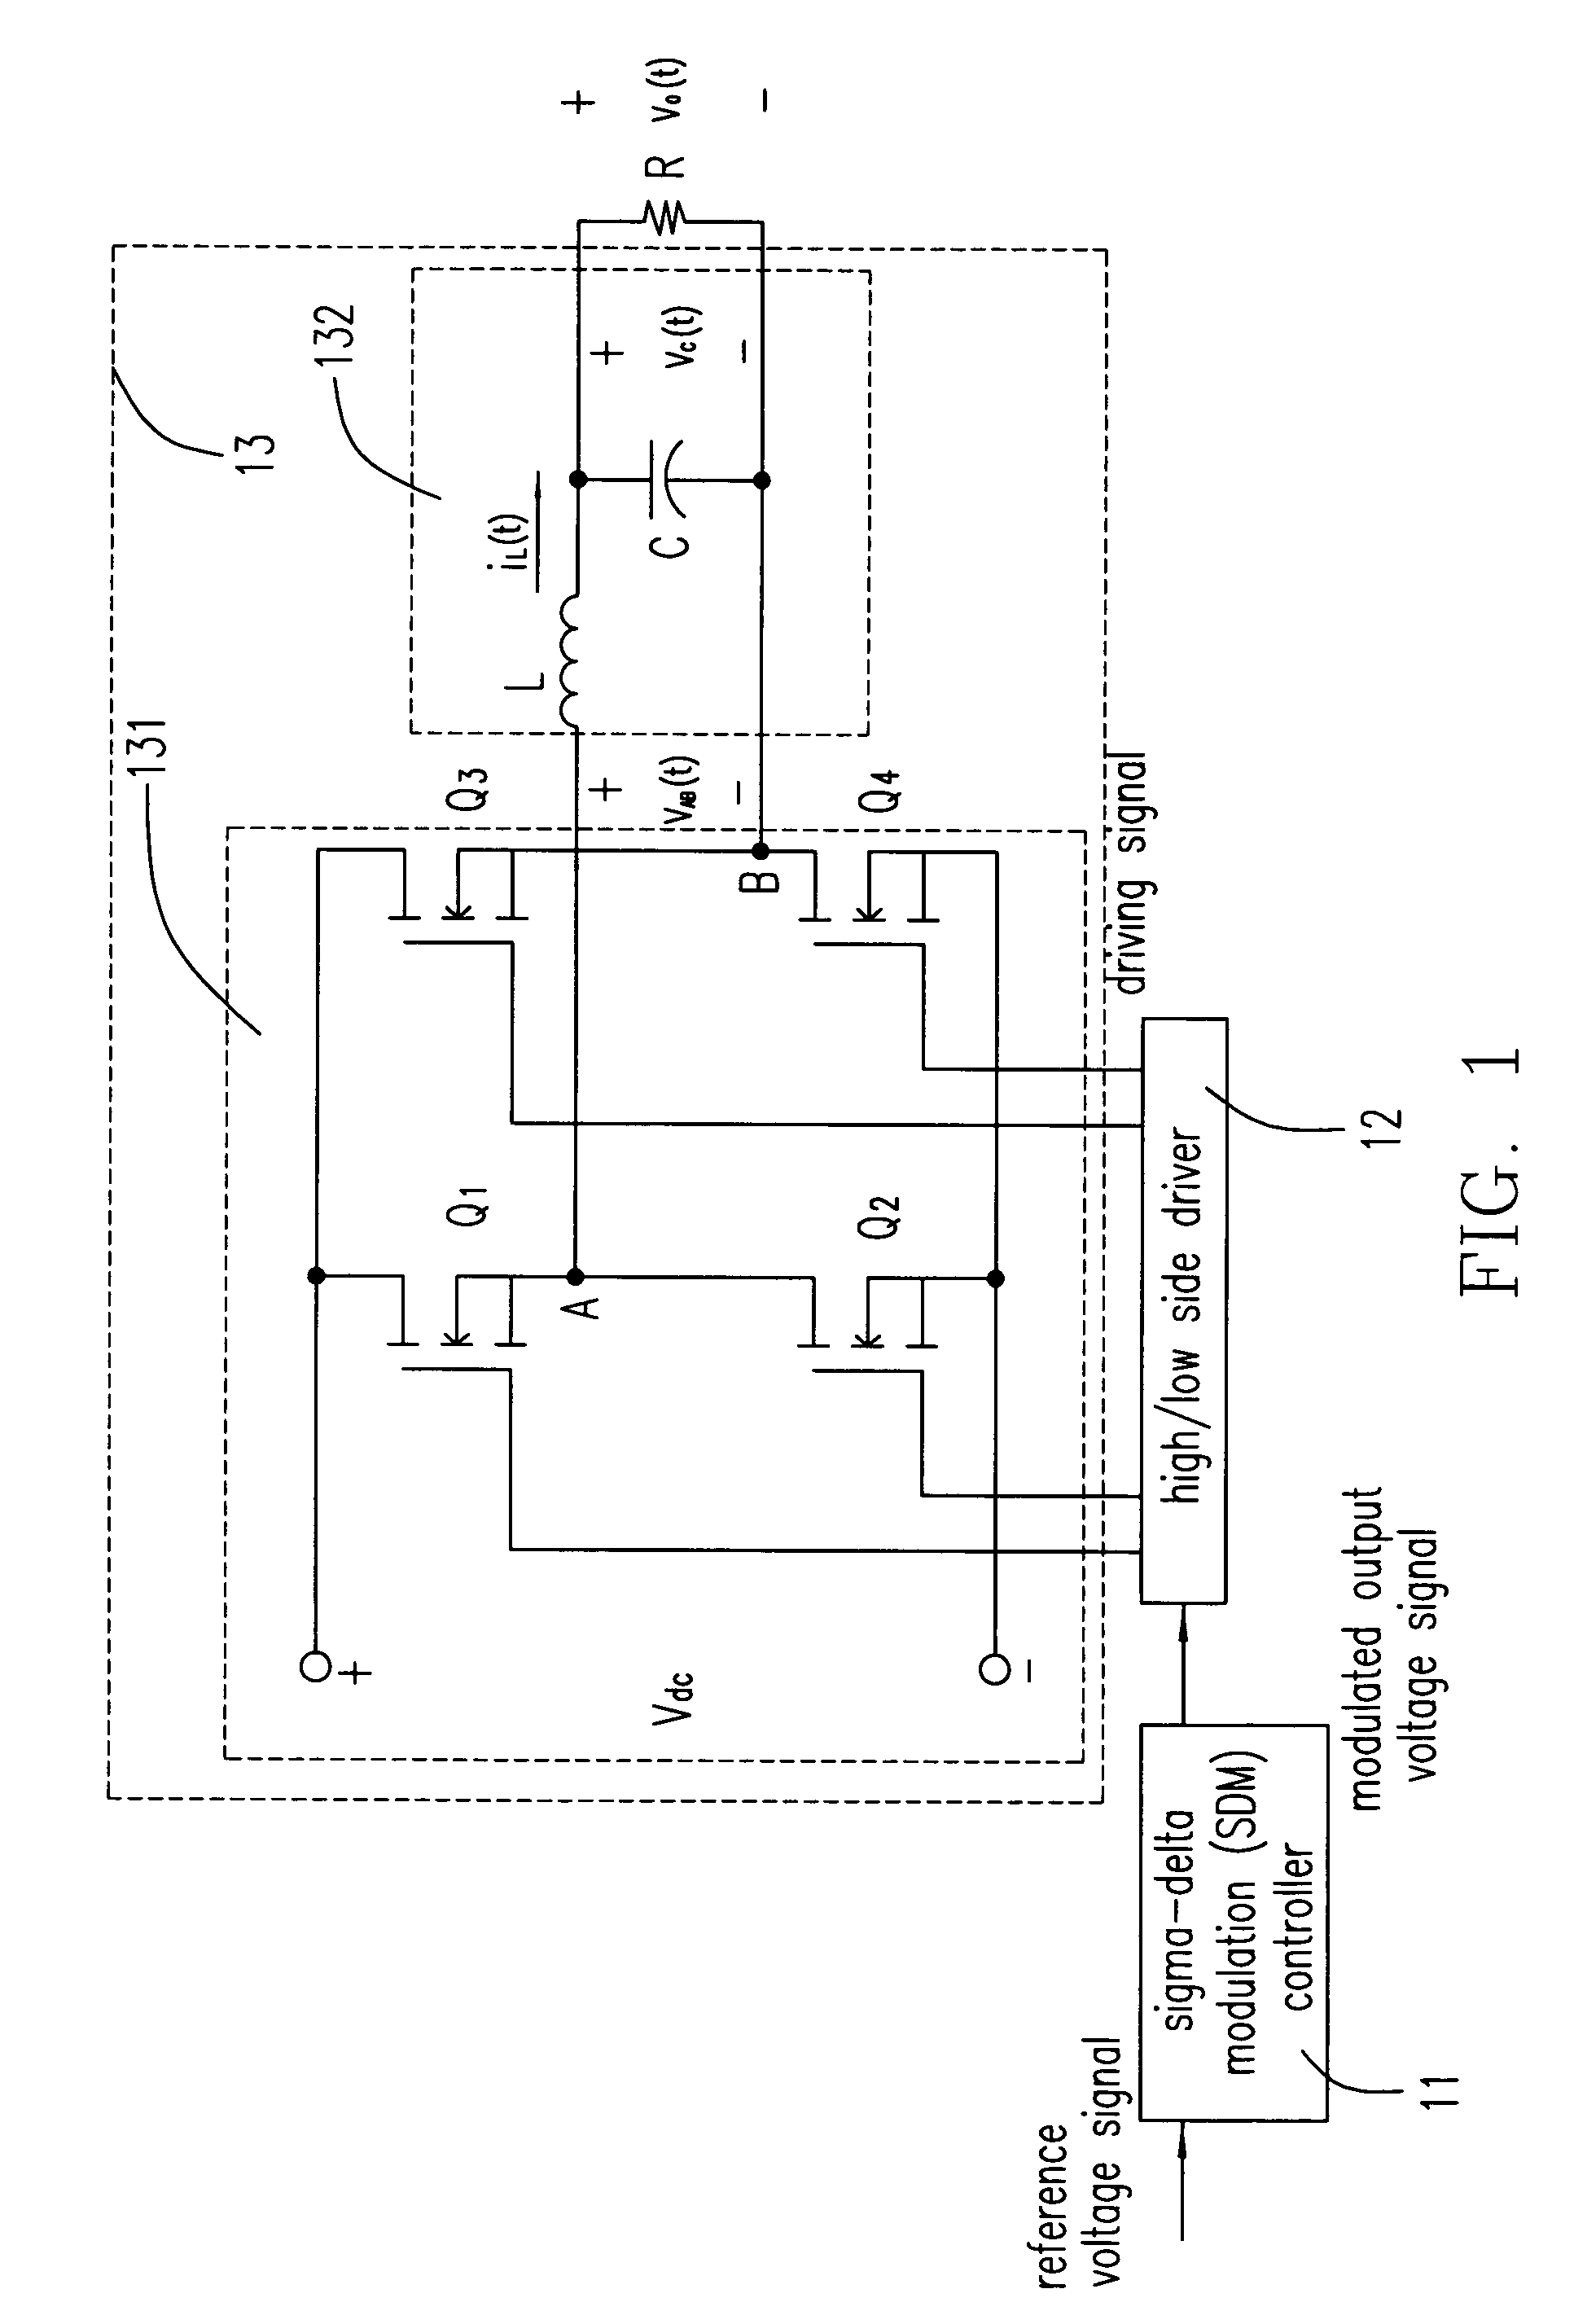 Sigma-delta modulation inverter with programmable waveform output